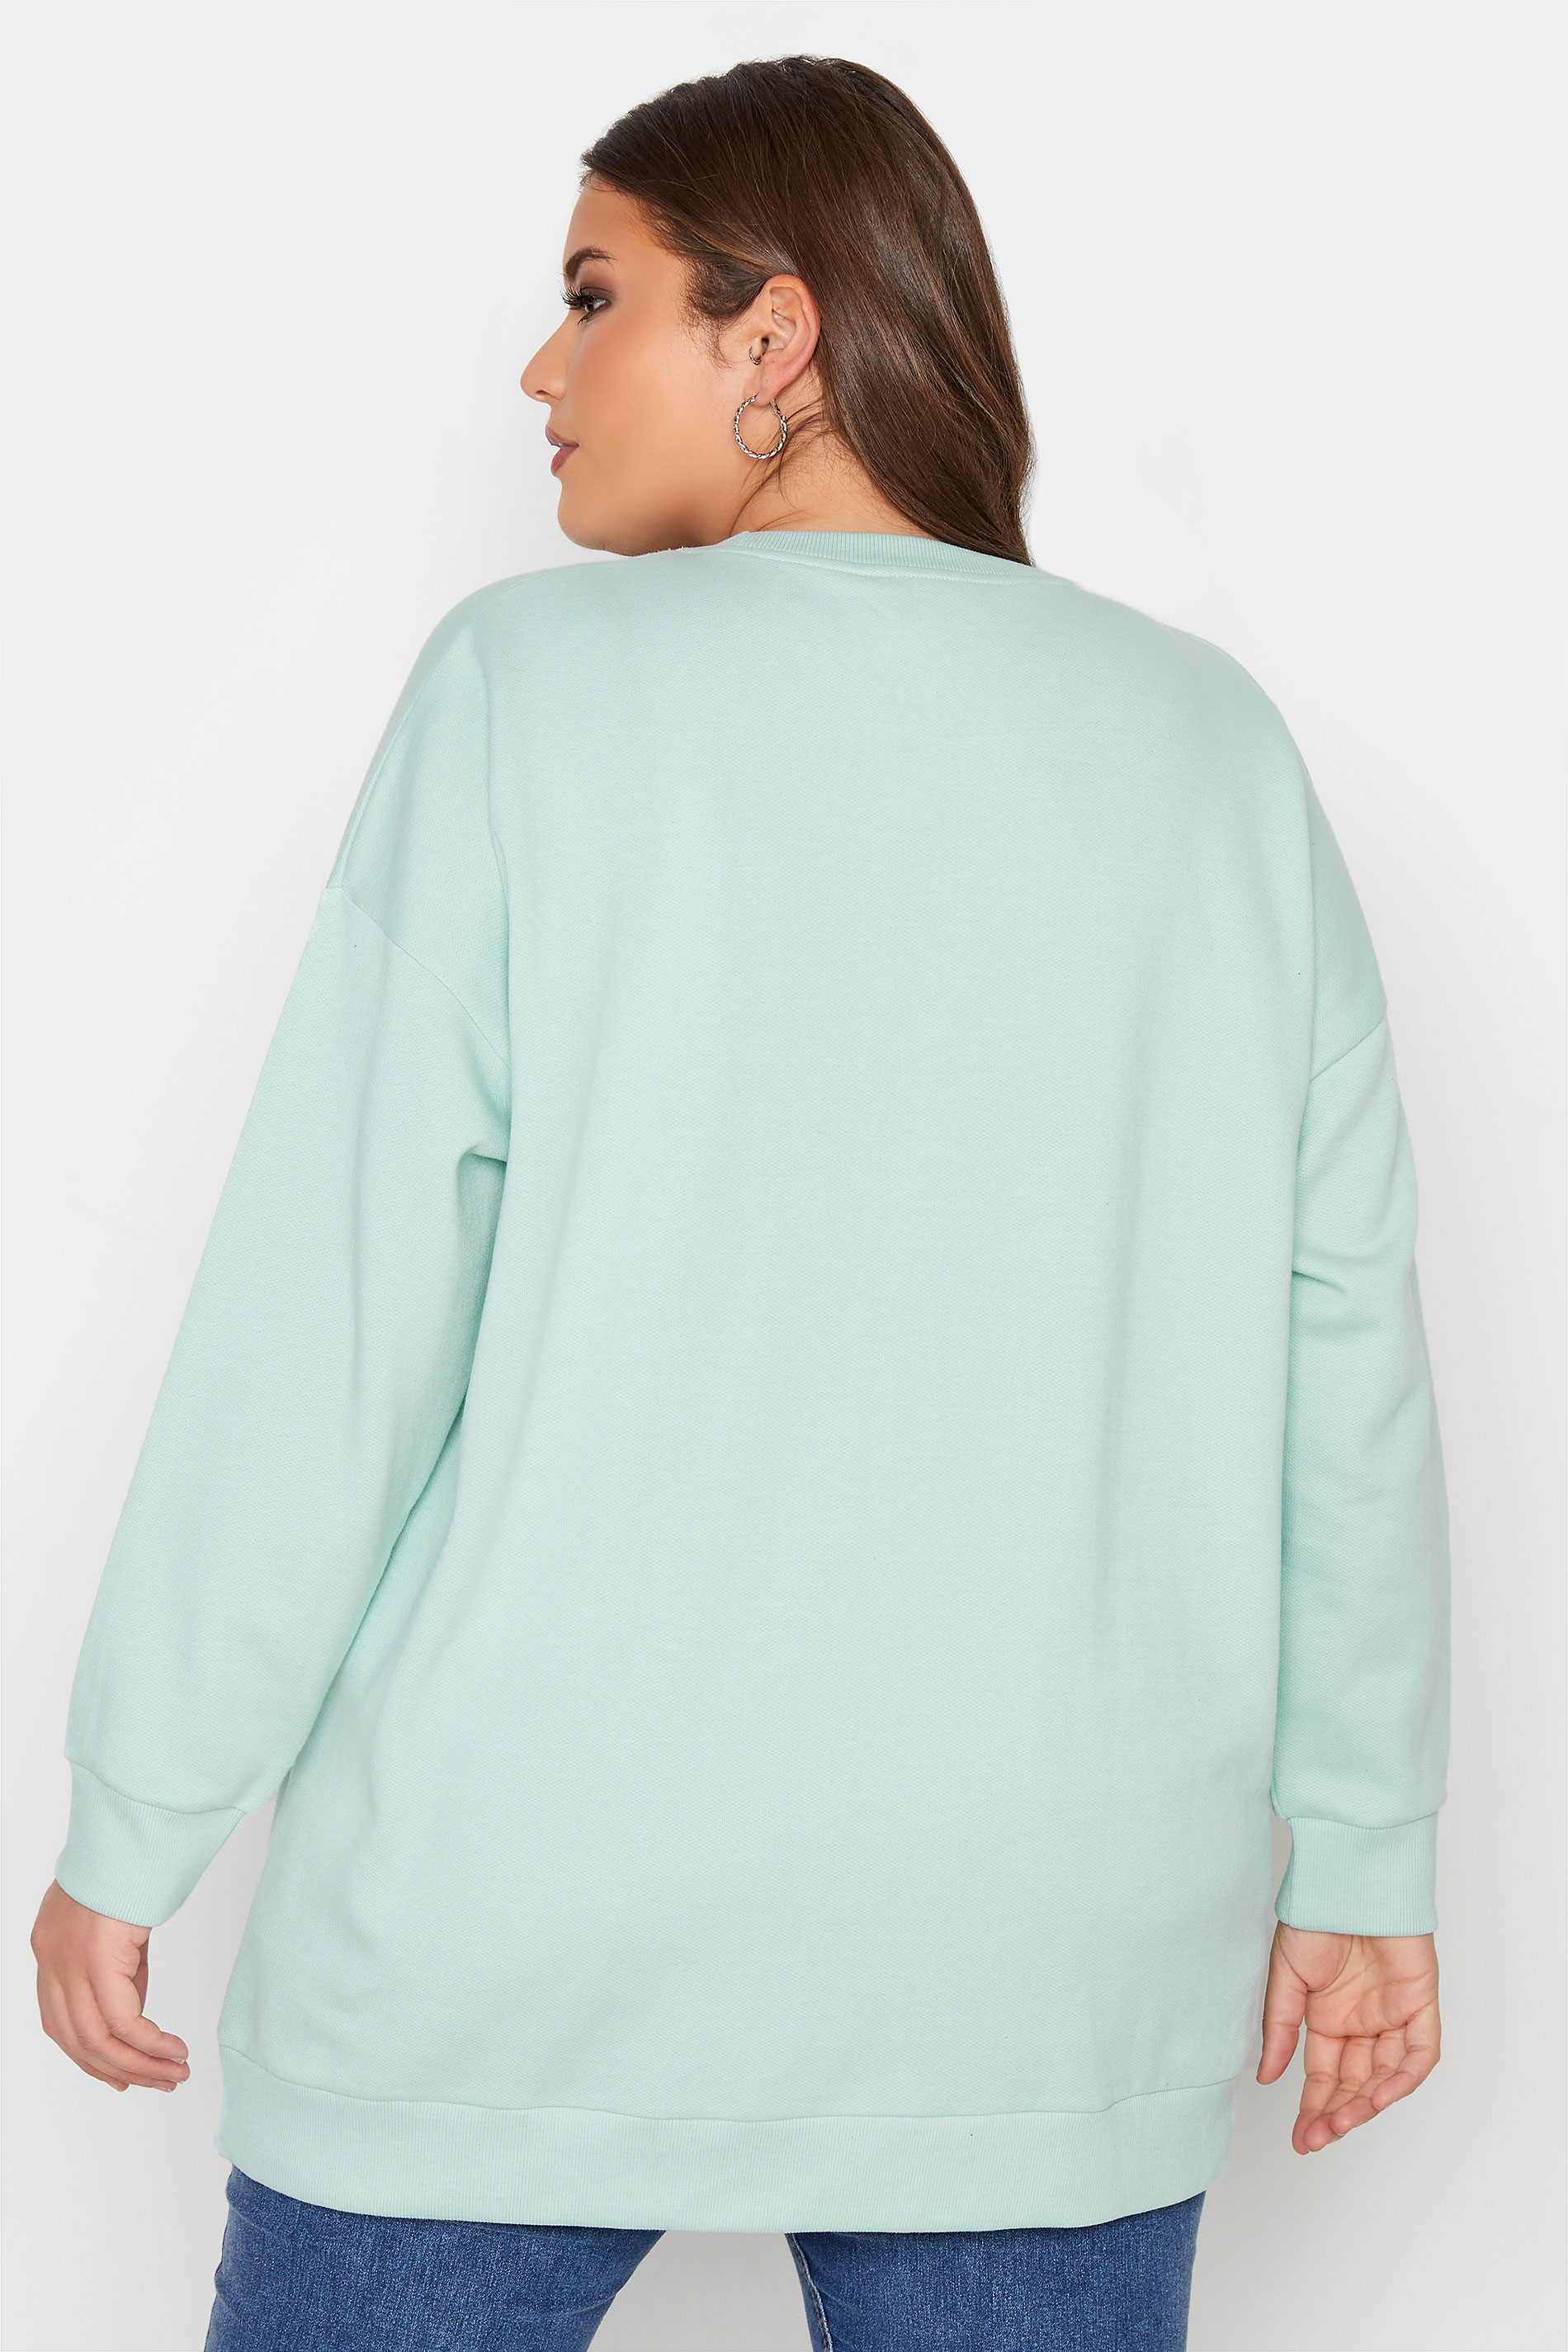 Plus Size Mint Green 'California' Slogan Sweatshirt | Yours Clothing  3